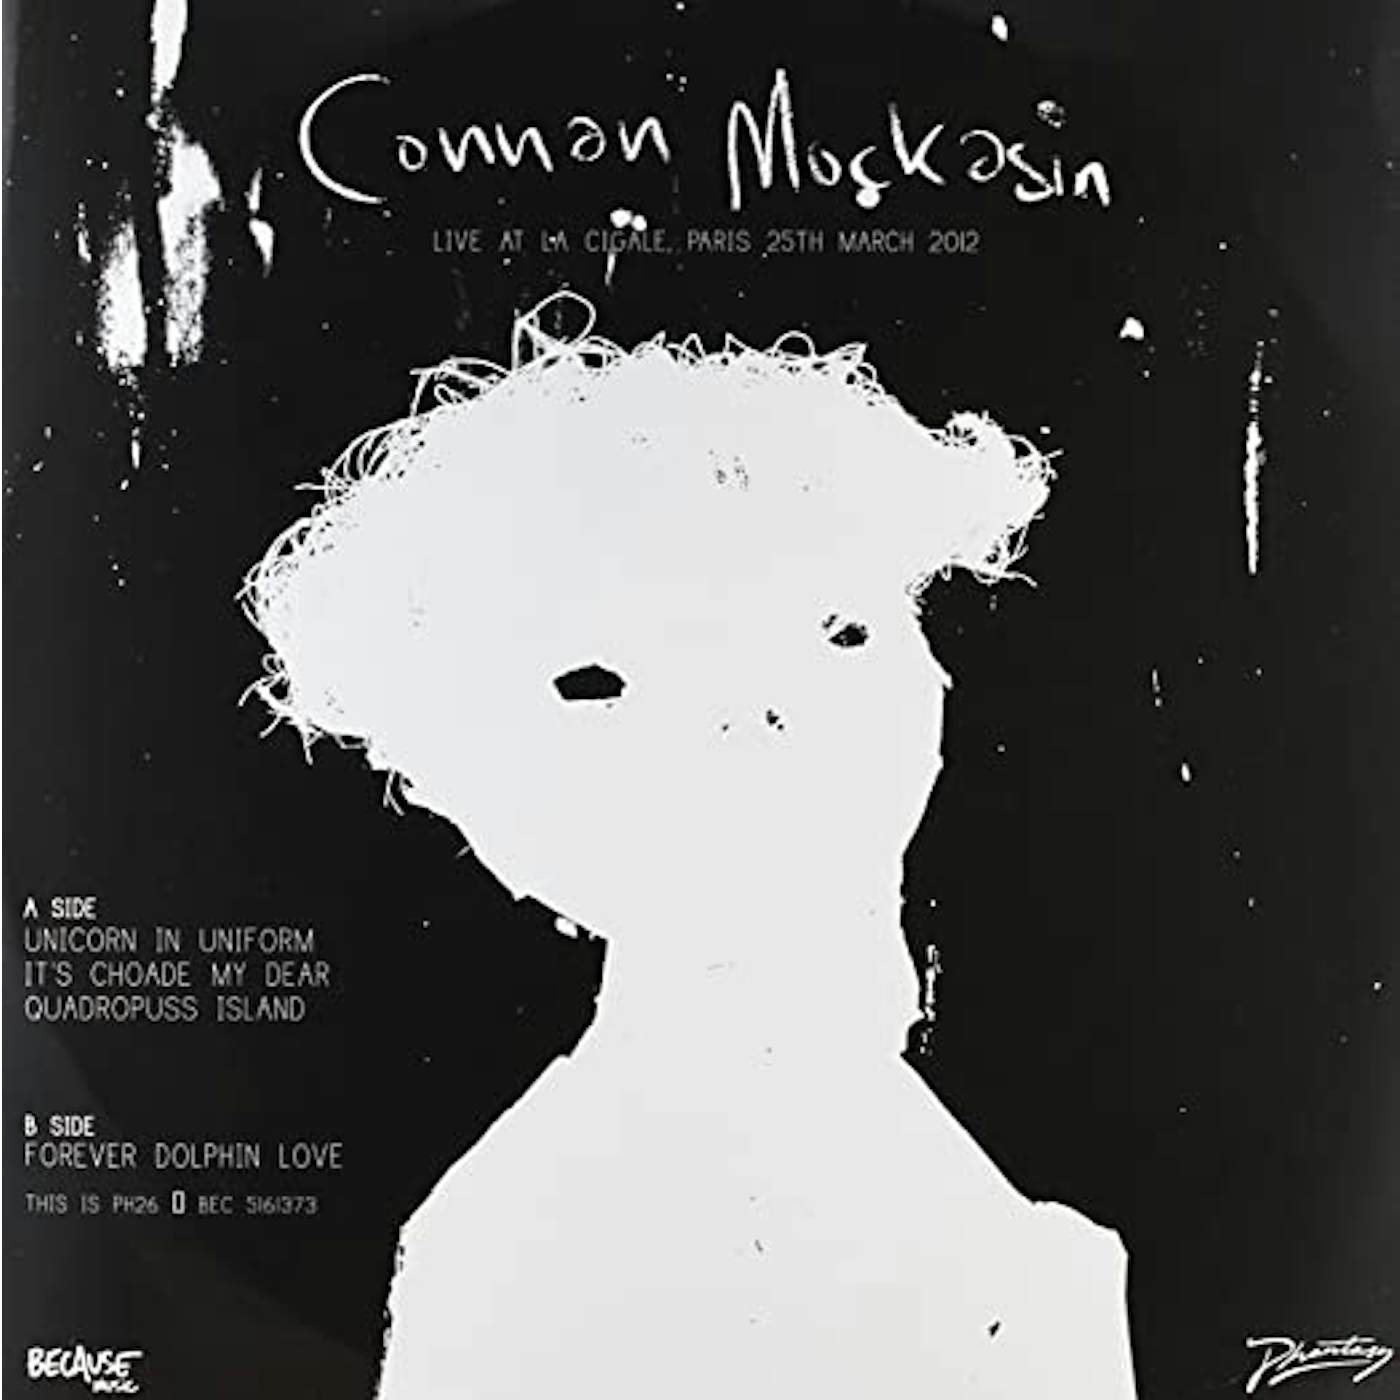 Connan Mockasin LIVE AT LA CIGALE 28TH MARCH 2012 Vinyl Record